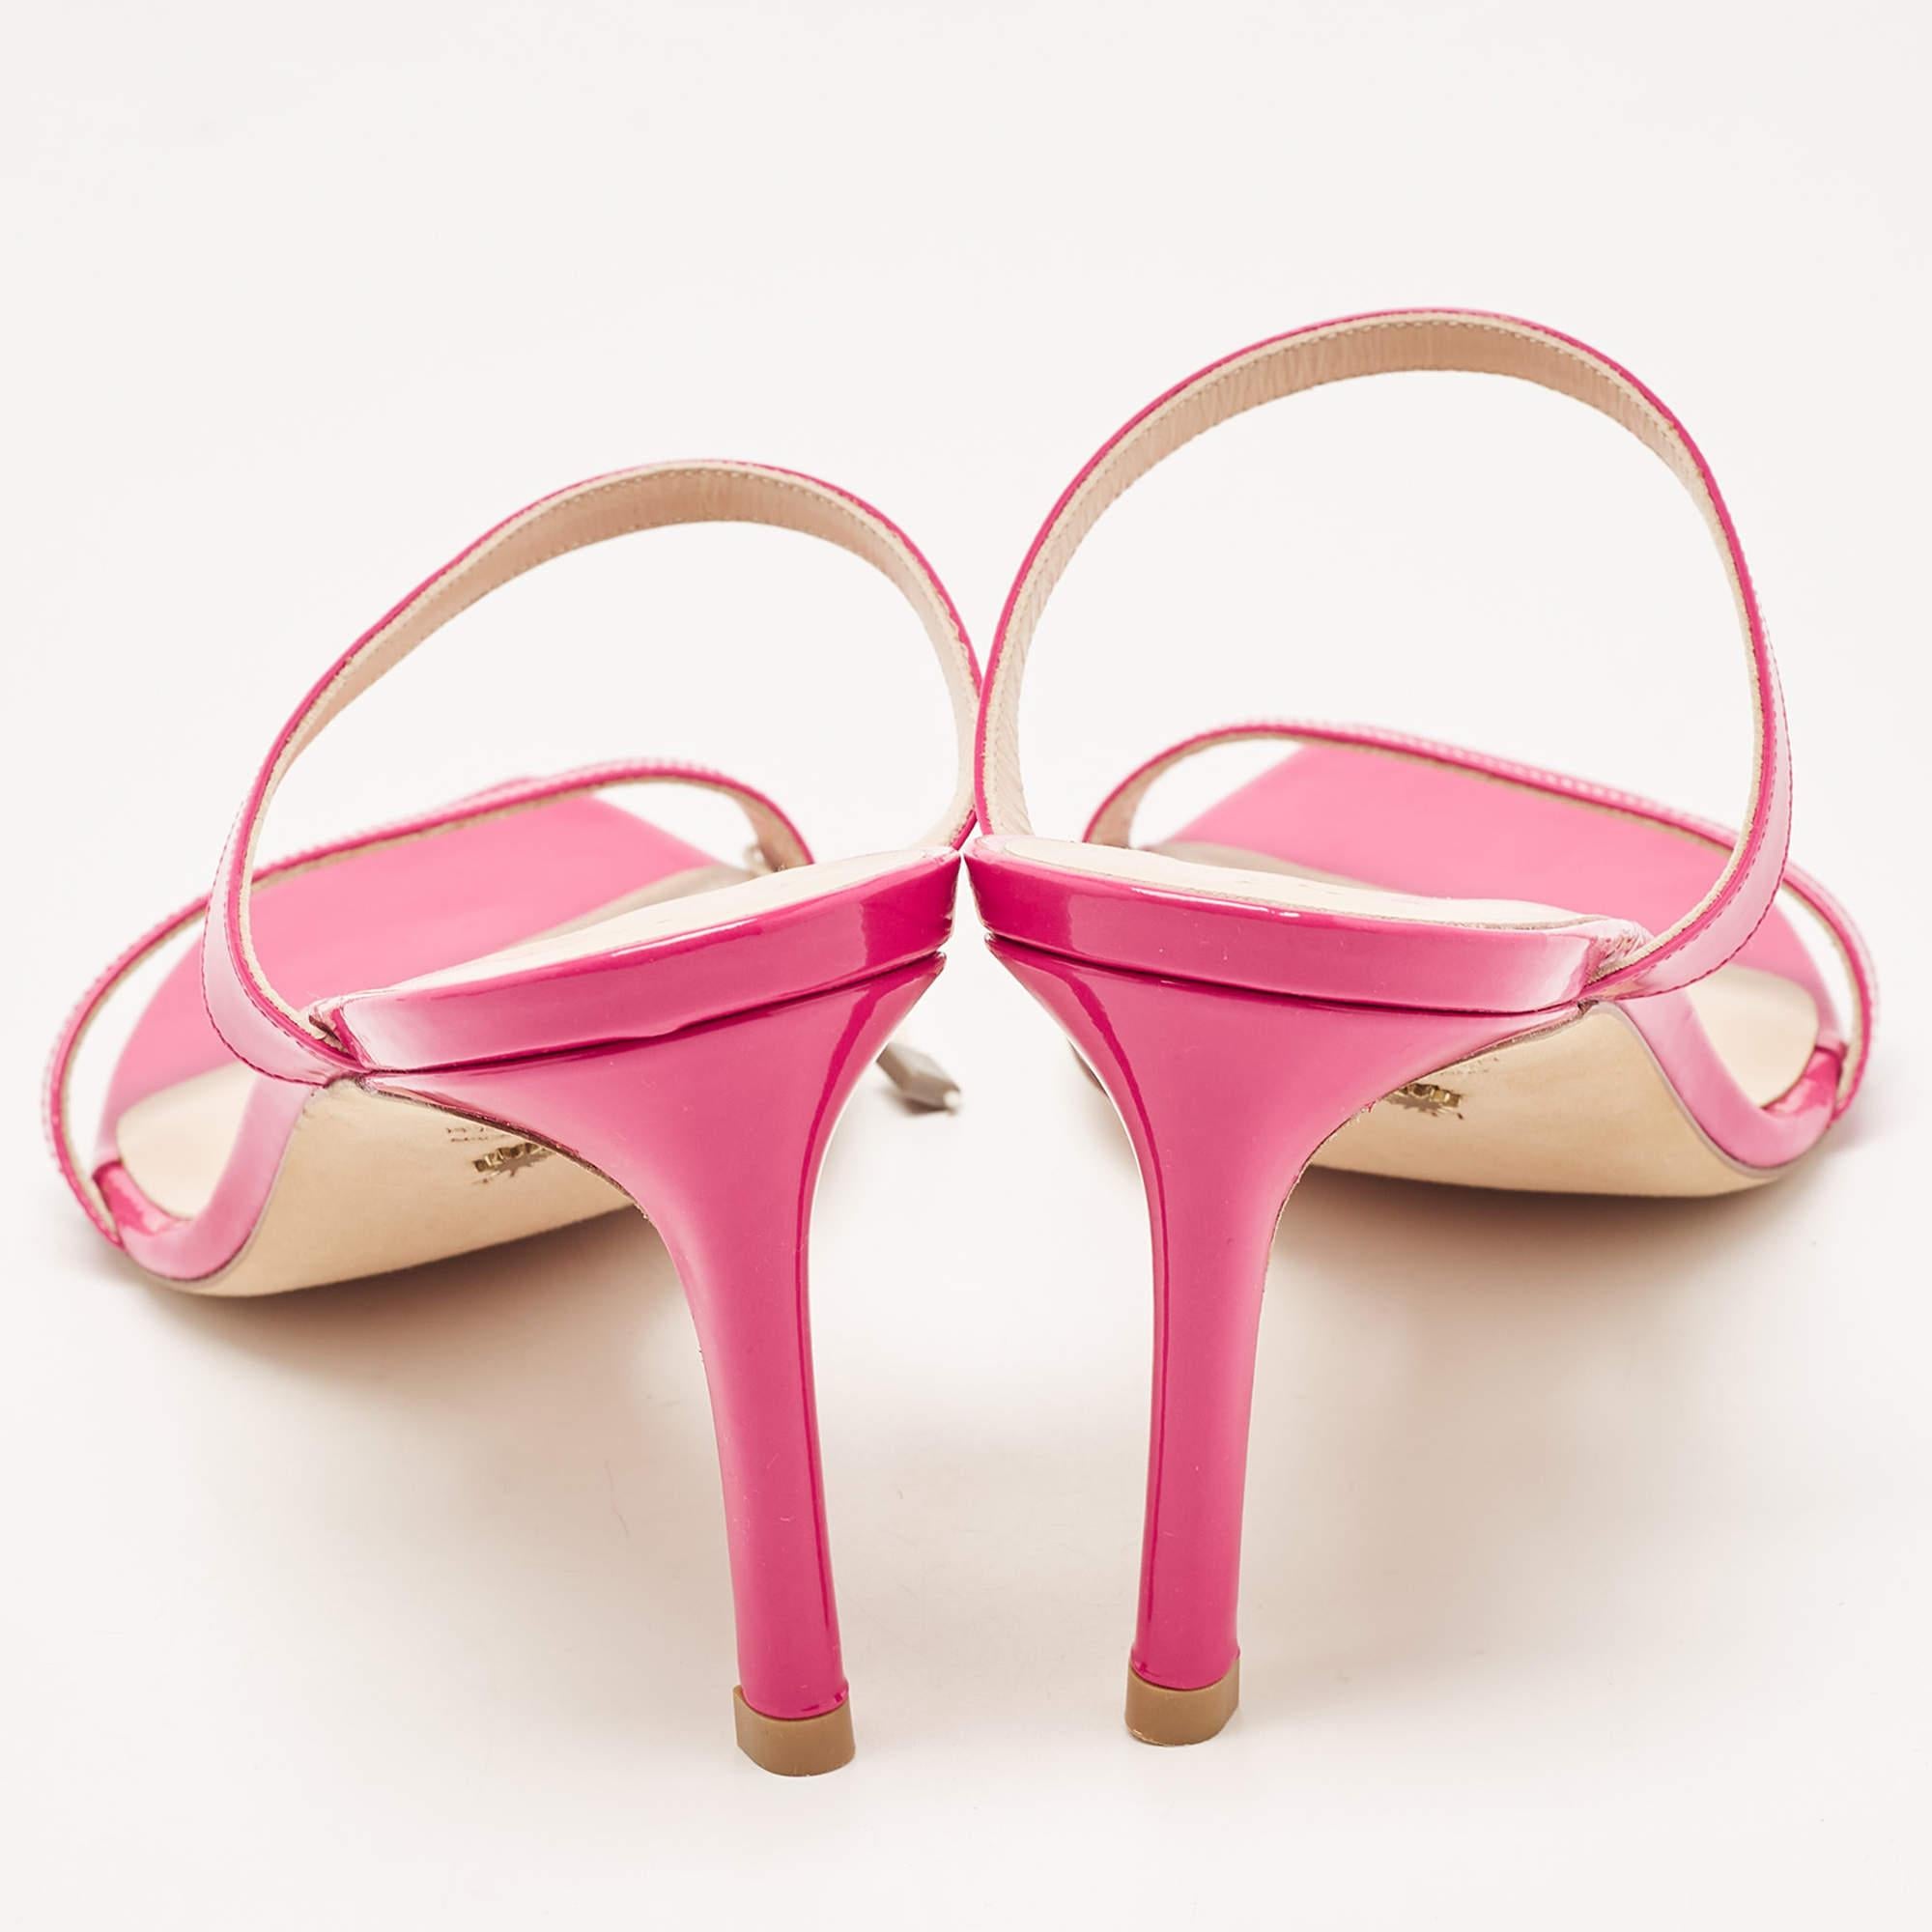 Stuart Weitzman Pink Patent Leather Slide Sandals Size 41 2